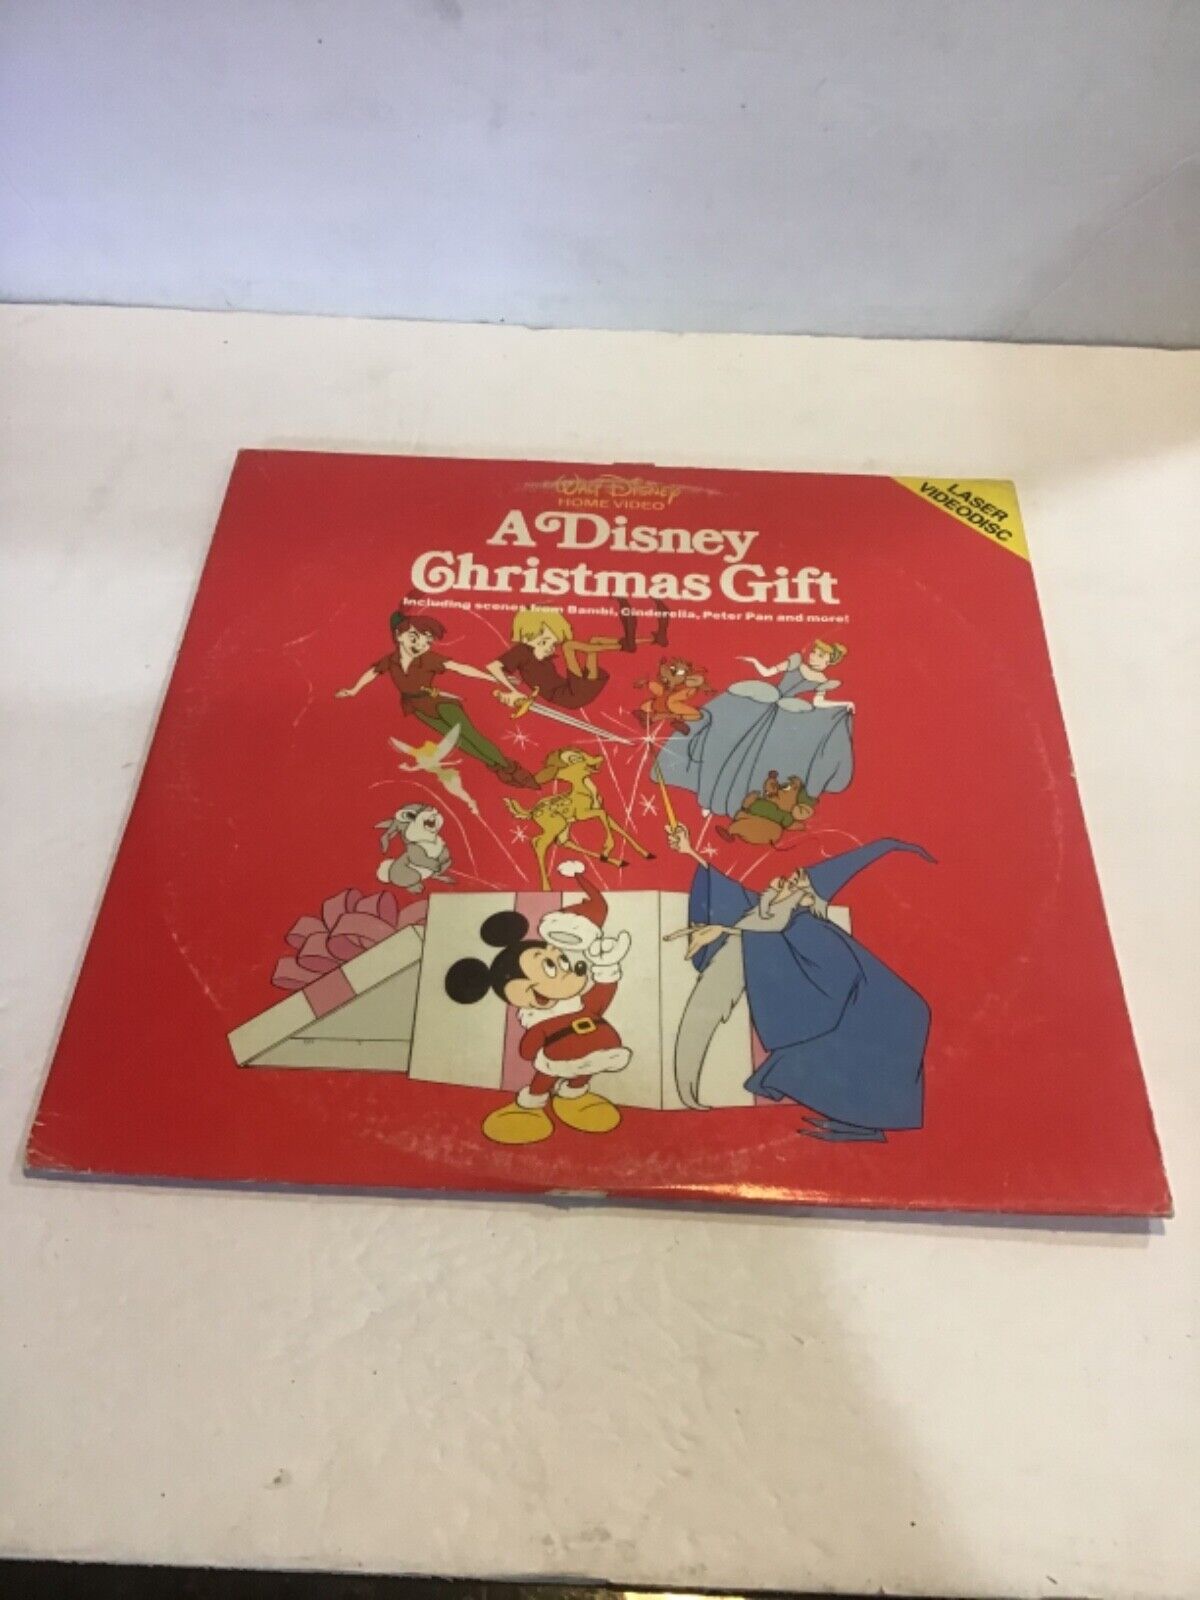 A Disney Christmas Gift Laserdisc